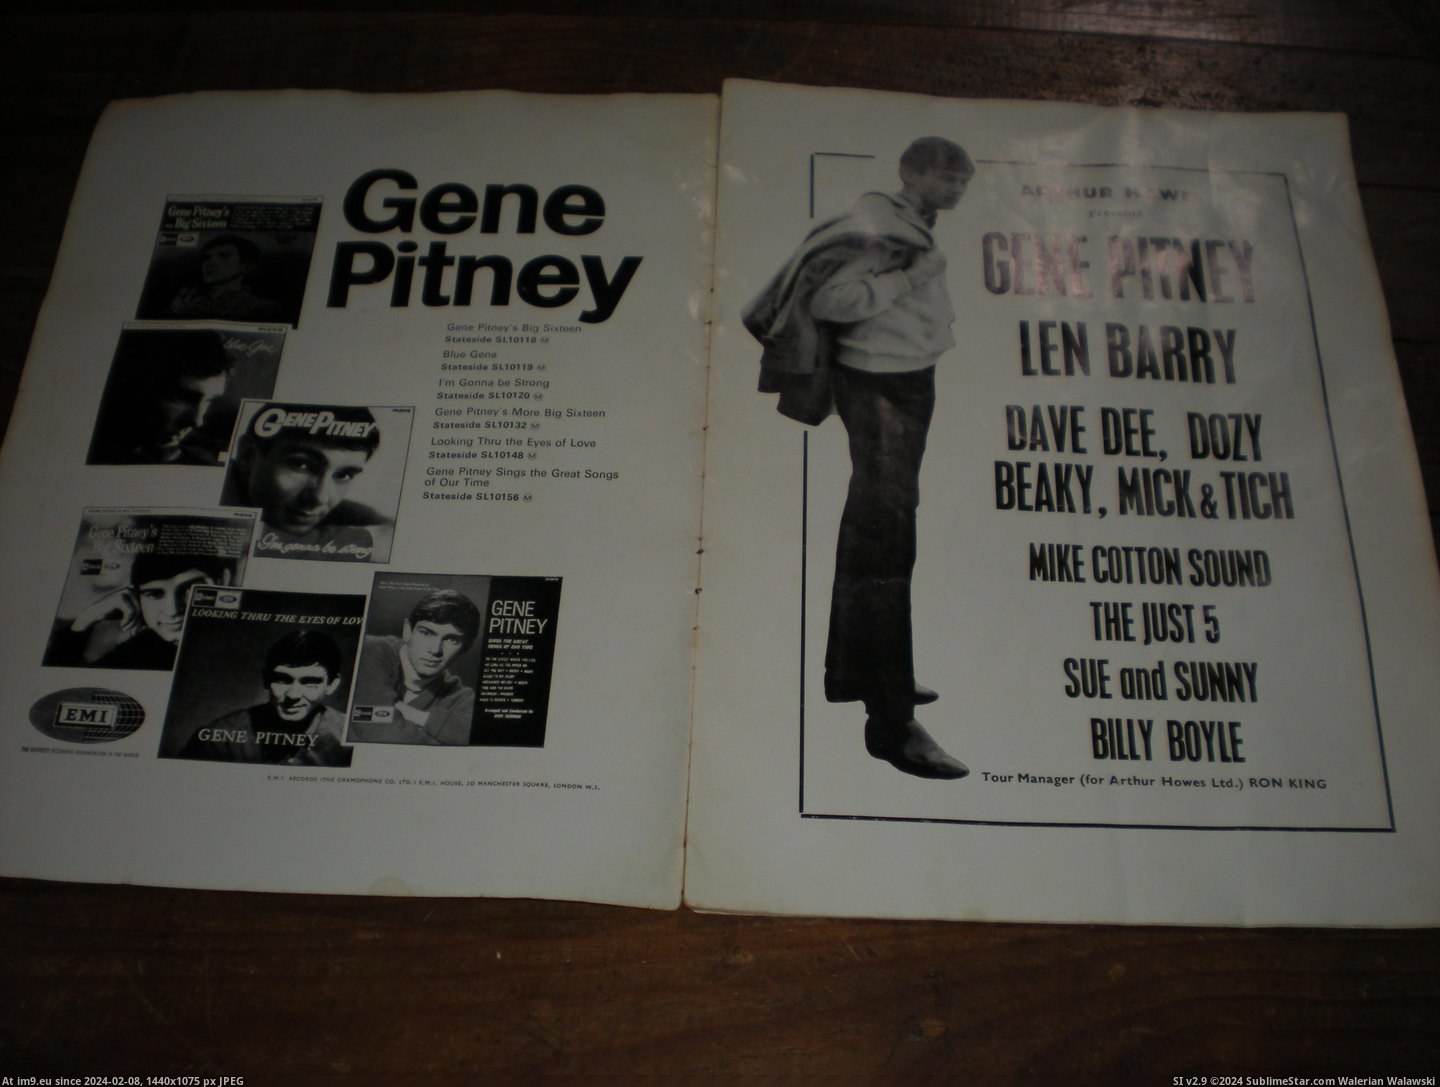 #Gene #Pitney #Prog Gene Pitney prog 3 Pic. (Изображение из альбом new 1))